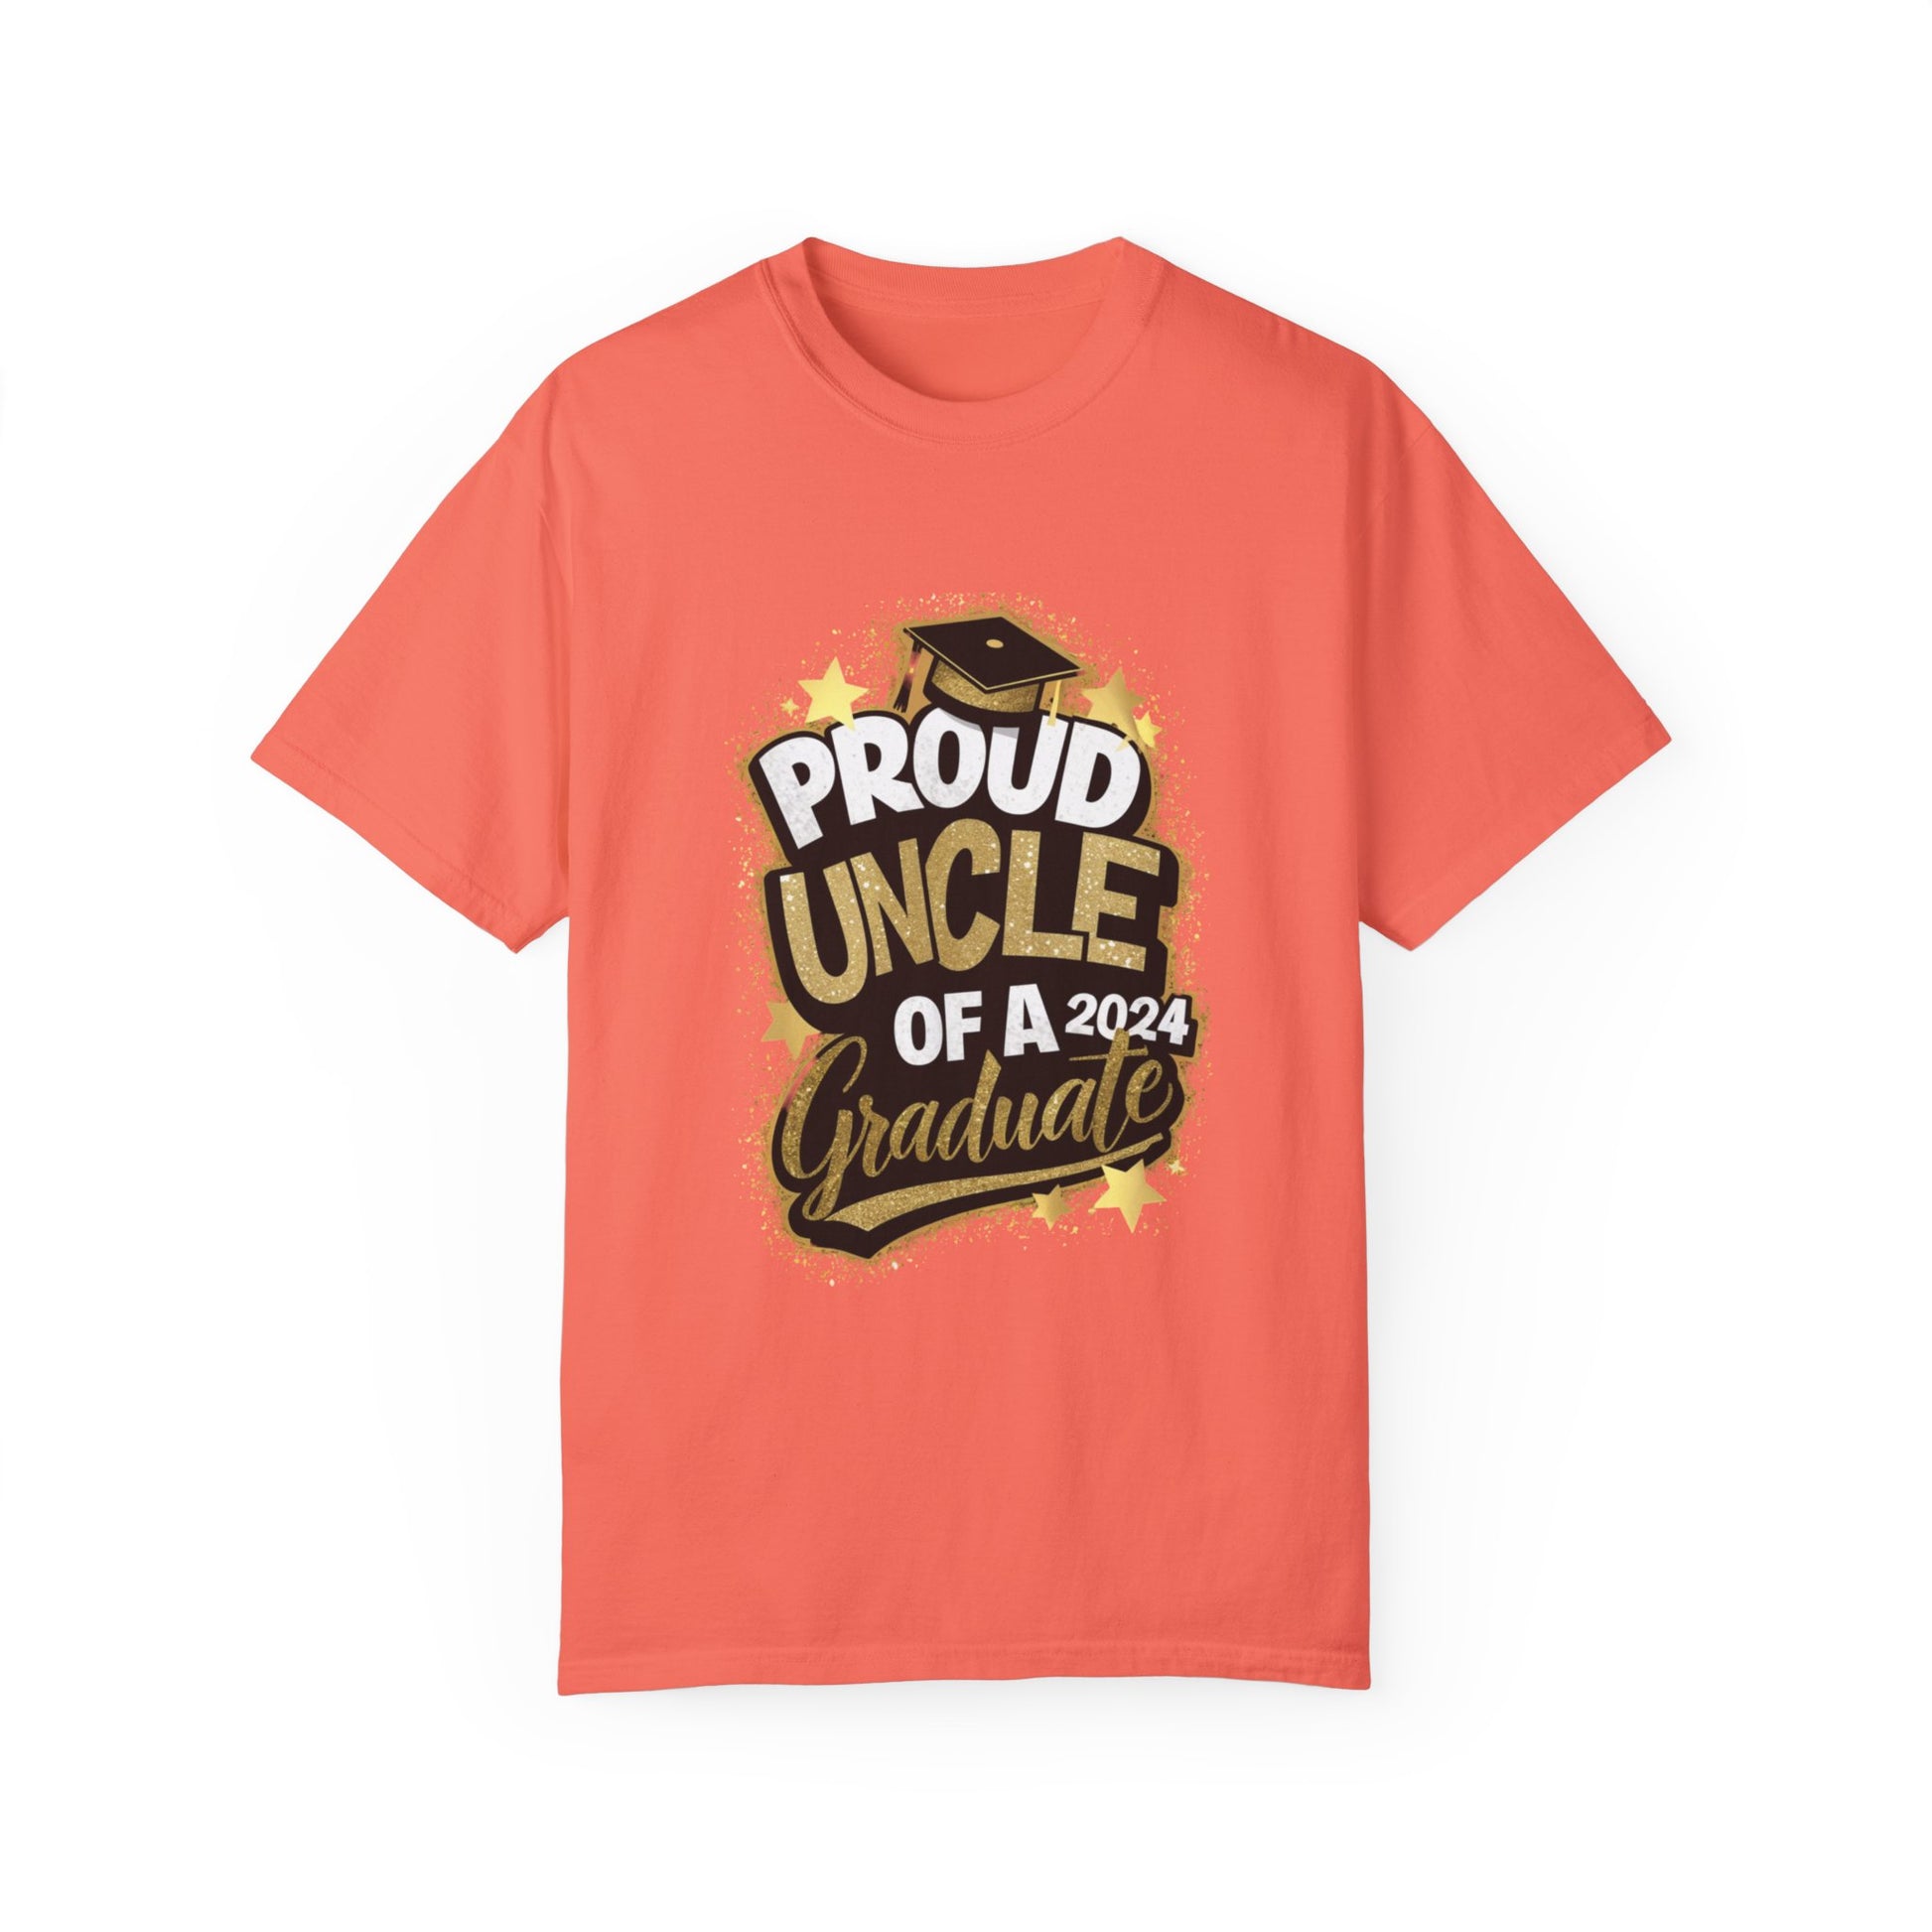 Proud Uncle of a 2024 Graduate Unisex Garment-dyed T-shirt Cotton Funny Humorous Graphic Soft Premium Unisex Men Women Bright Salmon T-shirt Birthday Gift-6